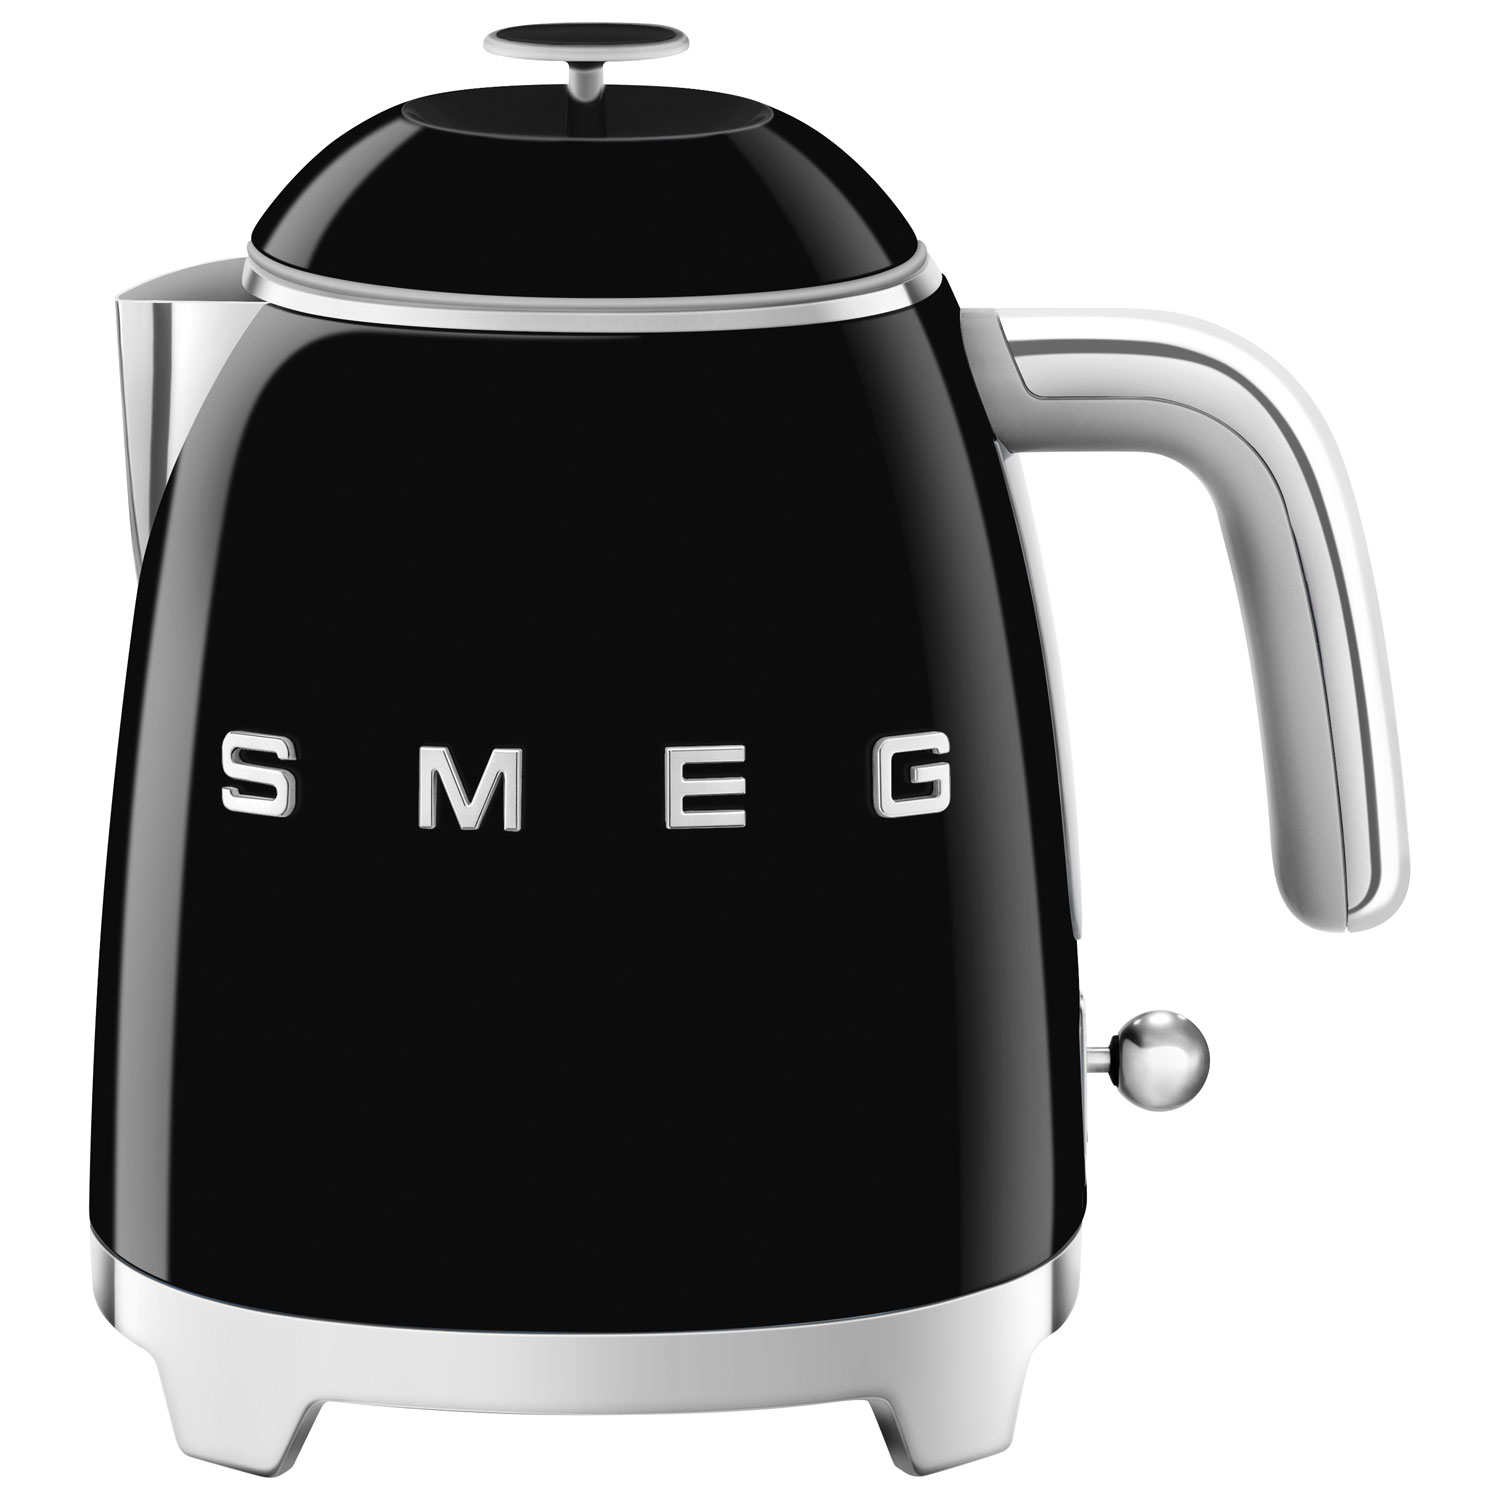 Smeg 50's Retro Style Mini Electric Kettle - 0.8L - Black